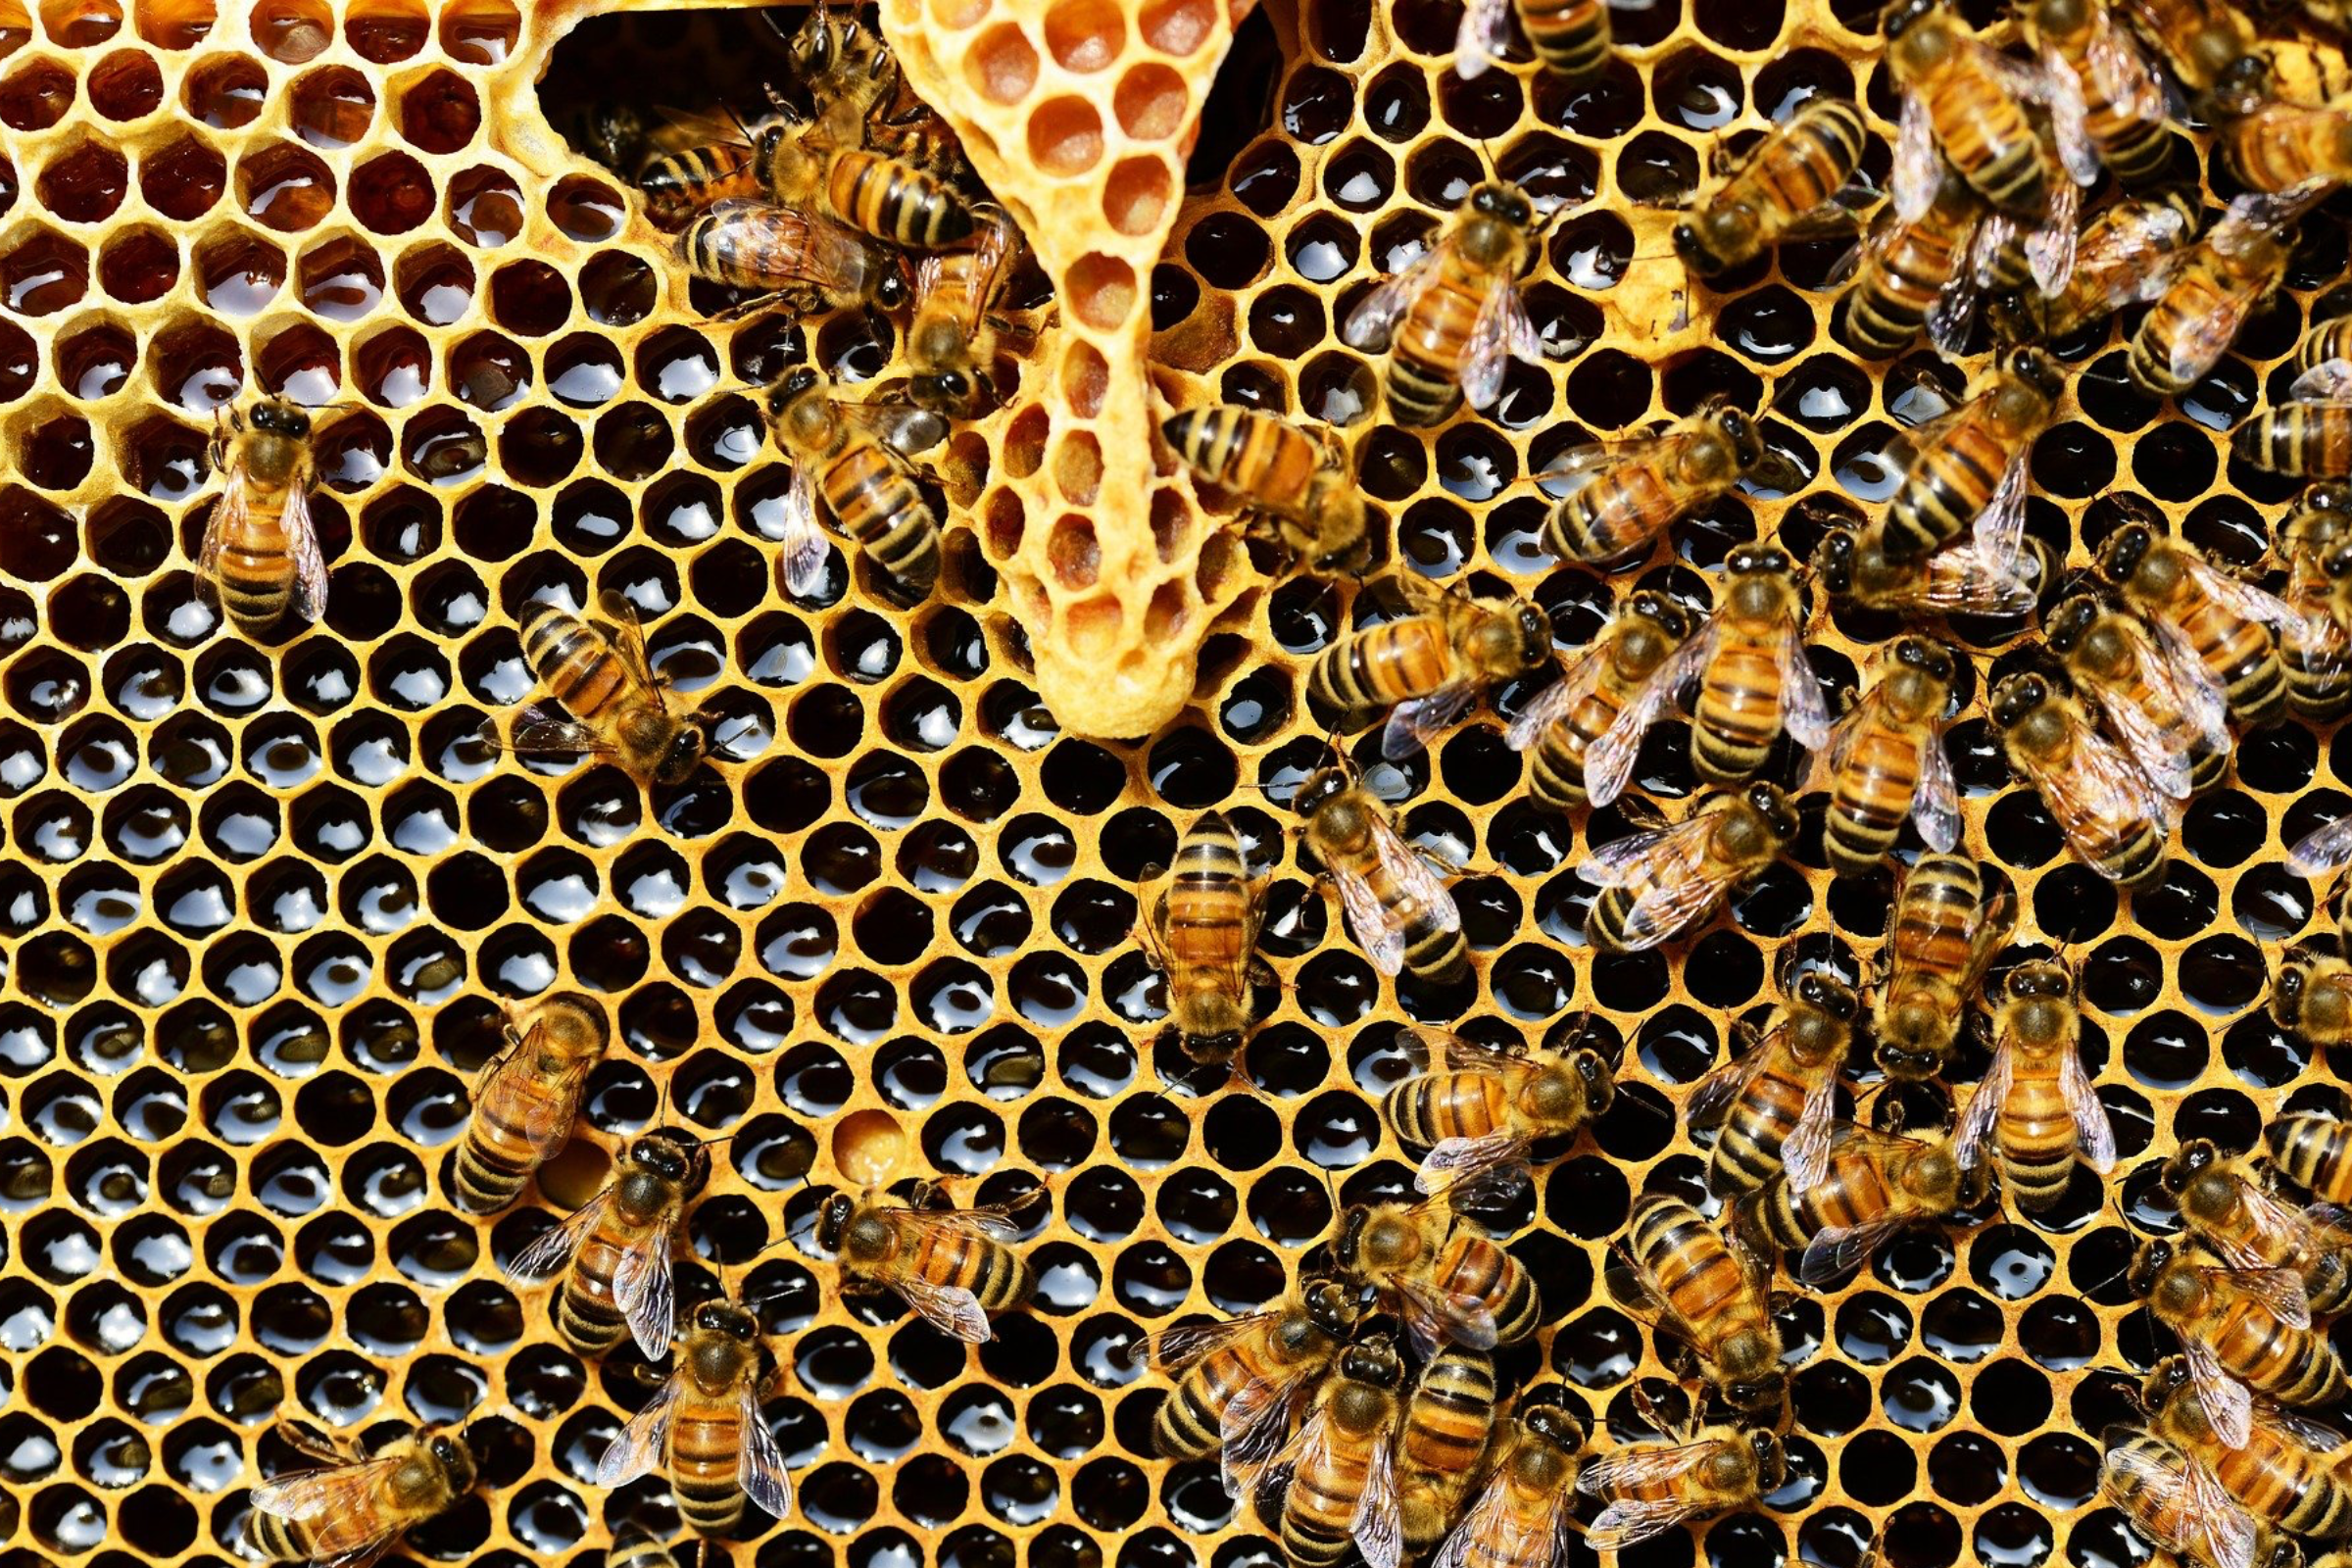 How Do Honey Bees Make Beeswax?